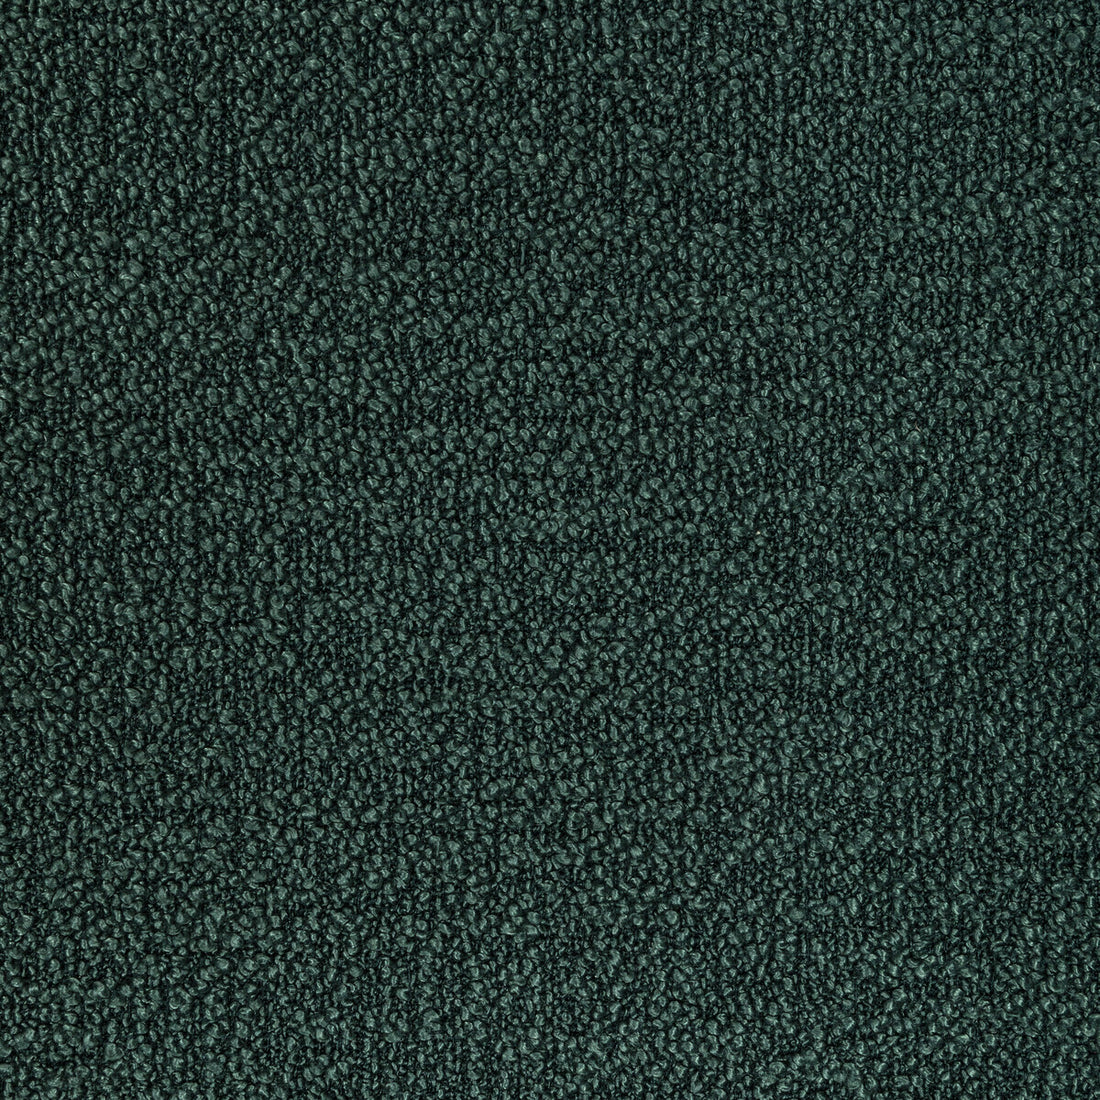 Kravet Smart fabric in 36857-53 color - pattern 36857.53.0 - by Kravet Smart in the Performance Kravetarmor collection